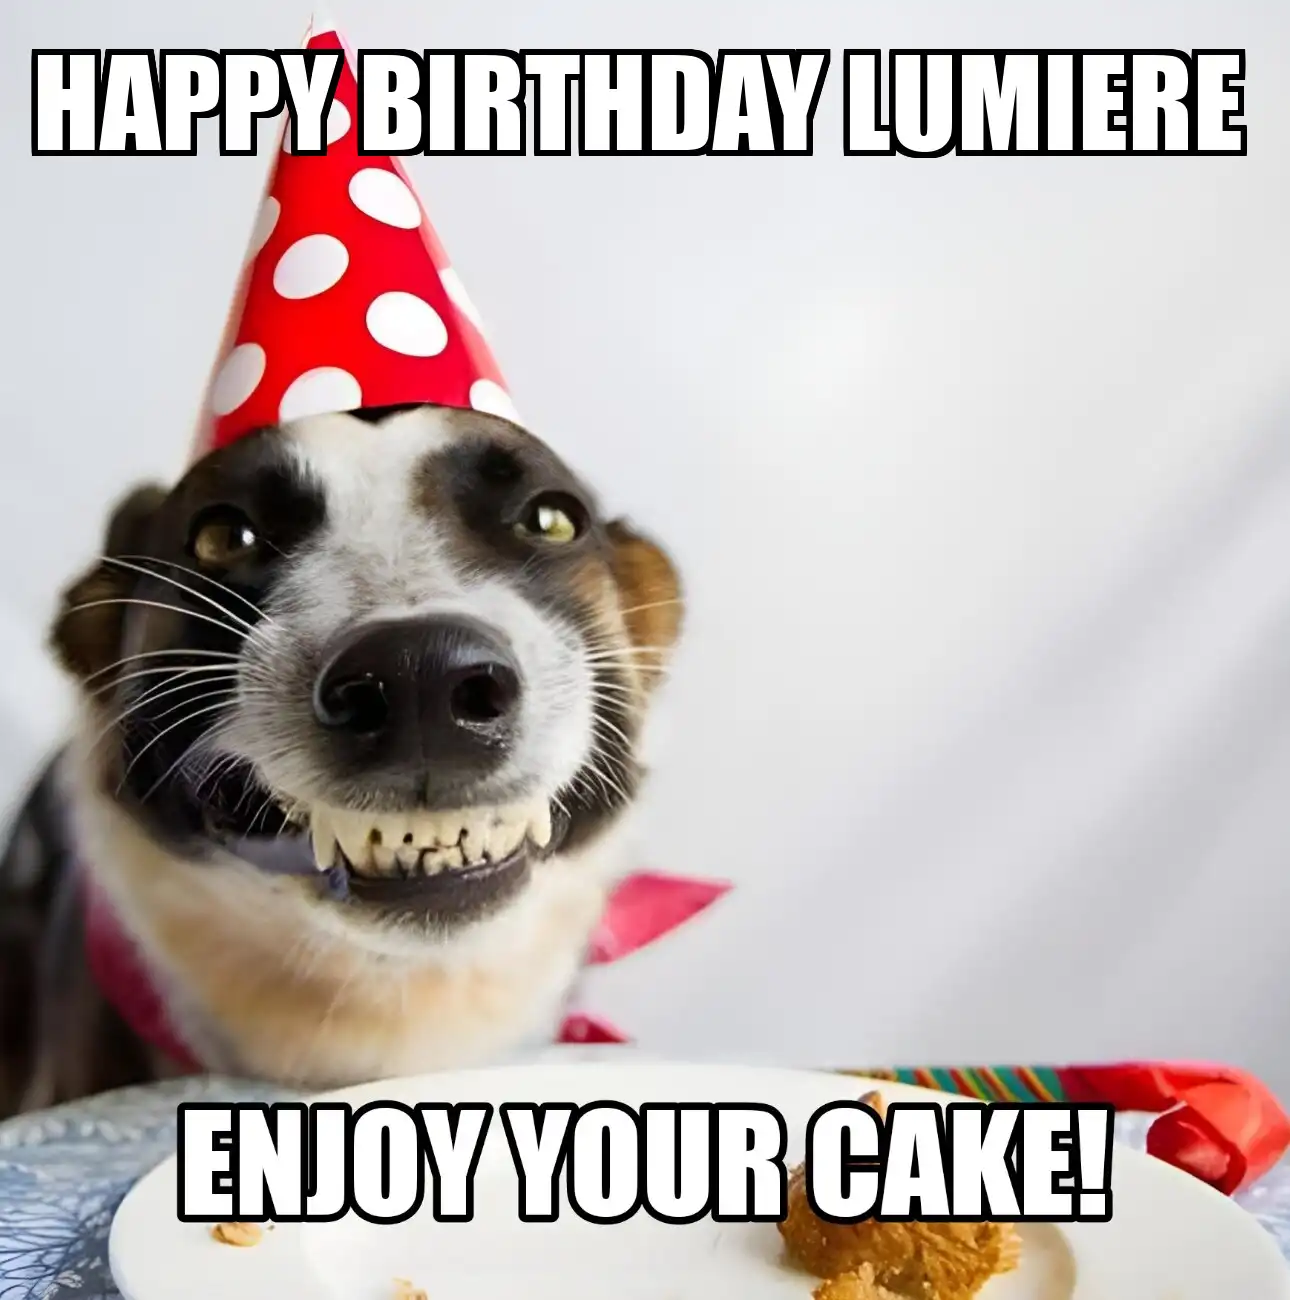 Happy Birthday Lumiere Enjoy Your Cake Dog Meme